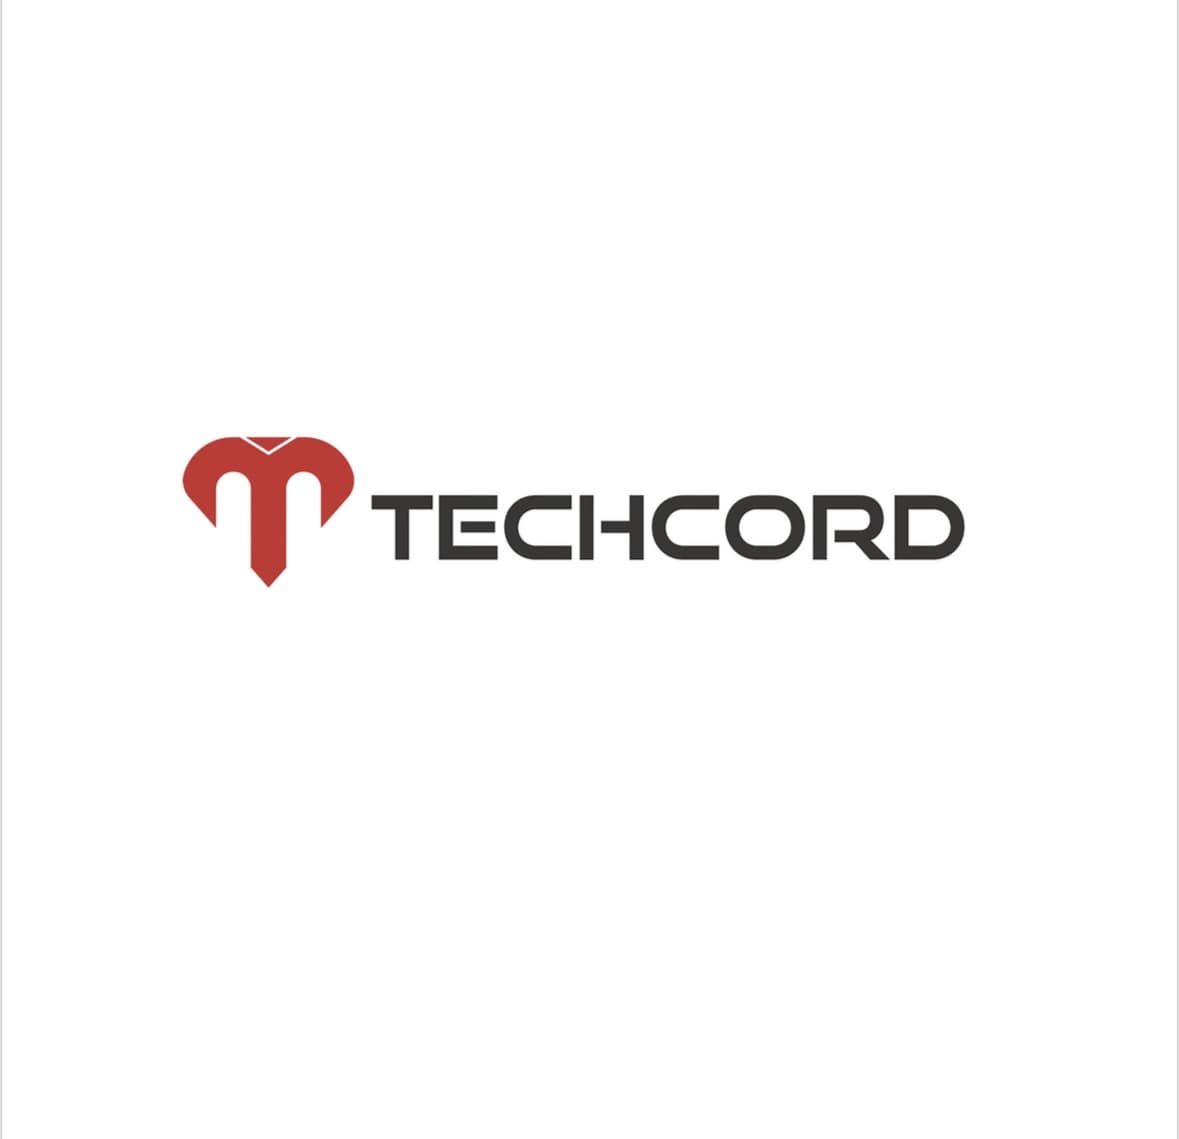 Tecchord Co., Ltd